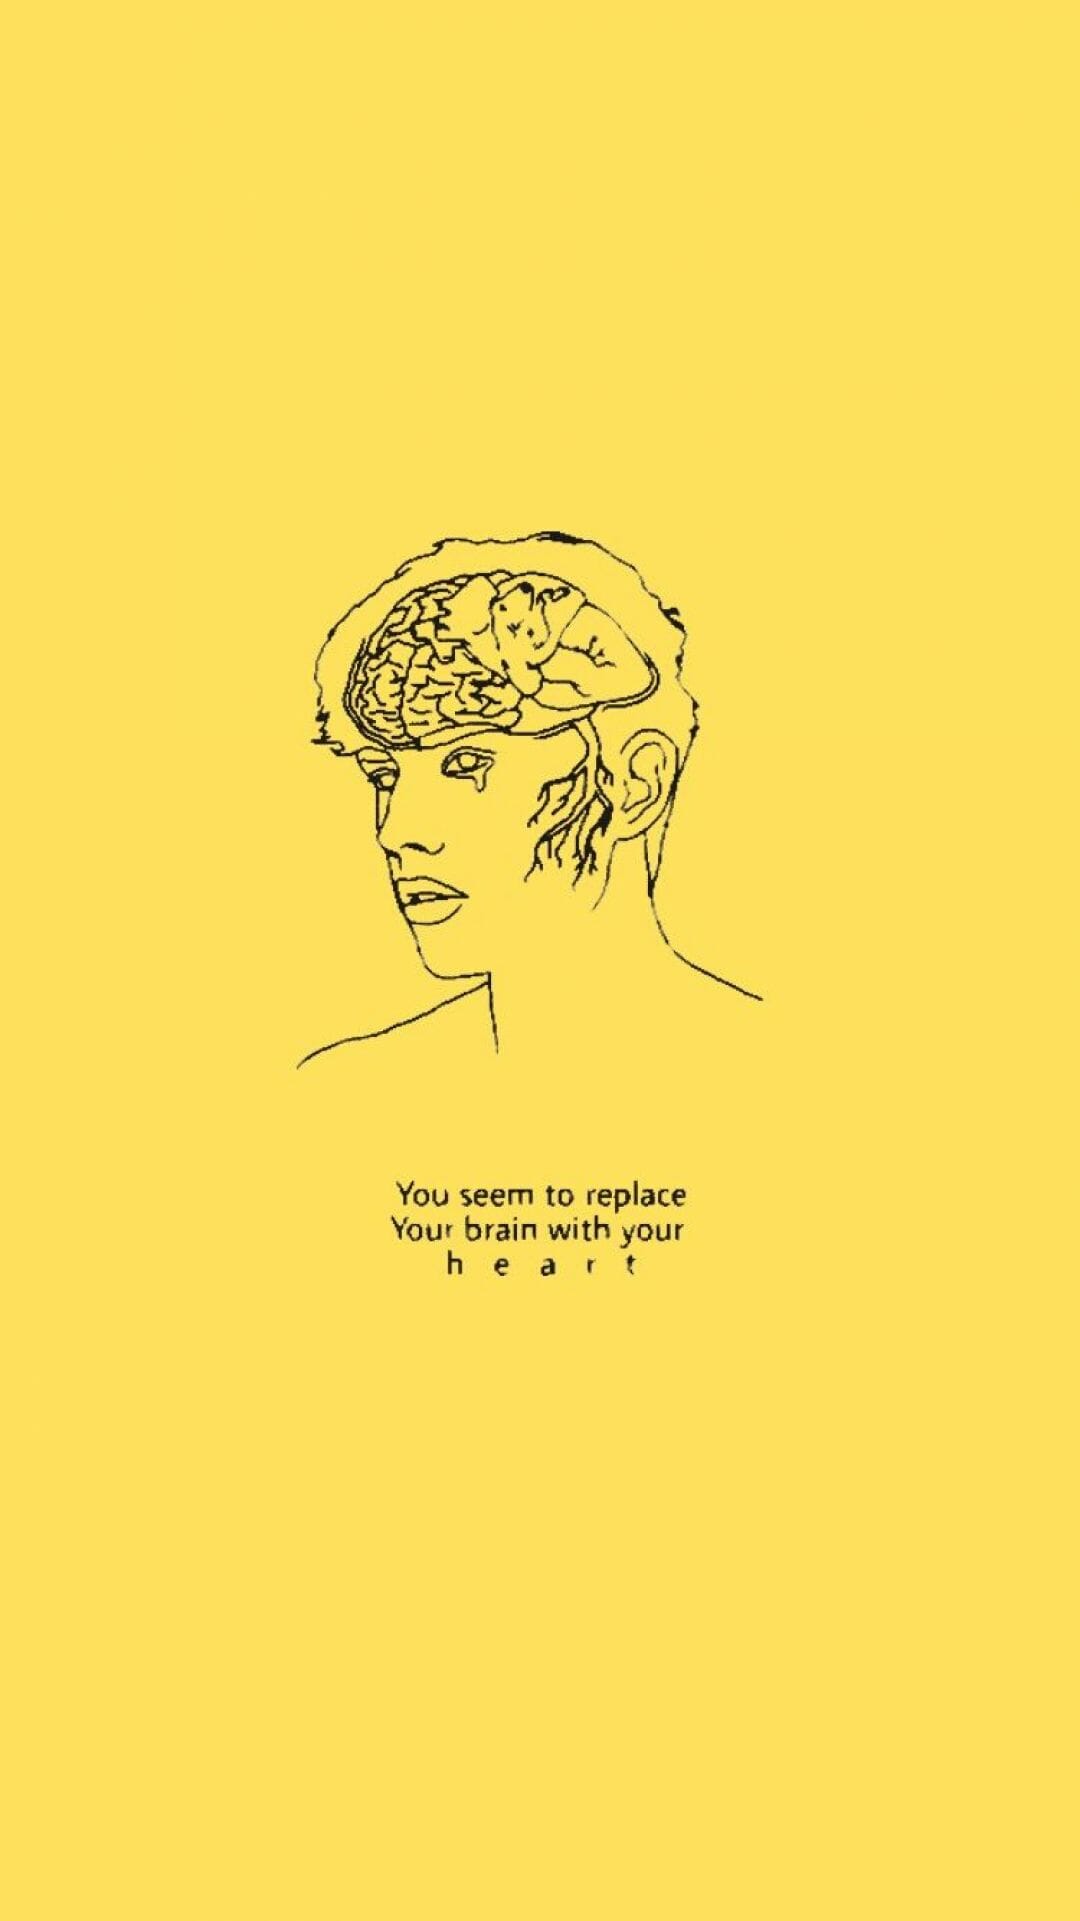 Yellow aesthetic wallpaper with a brain illustration - Sad quotes, depressing, sad